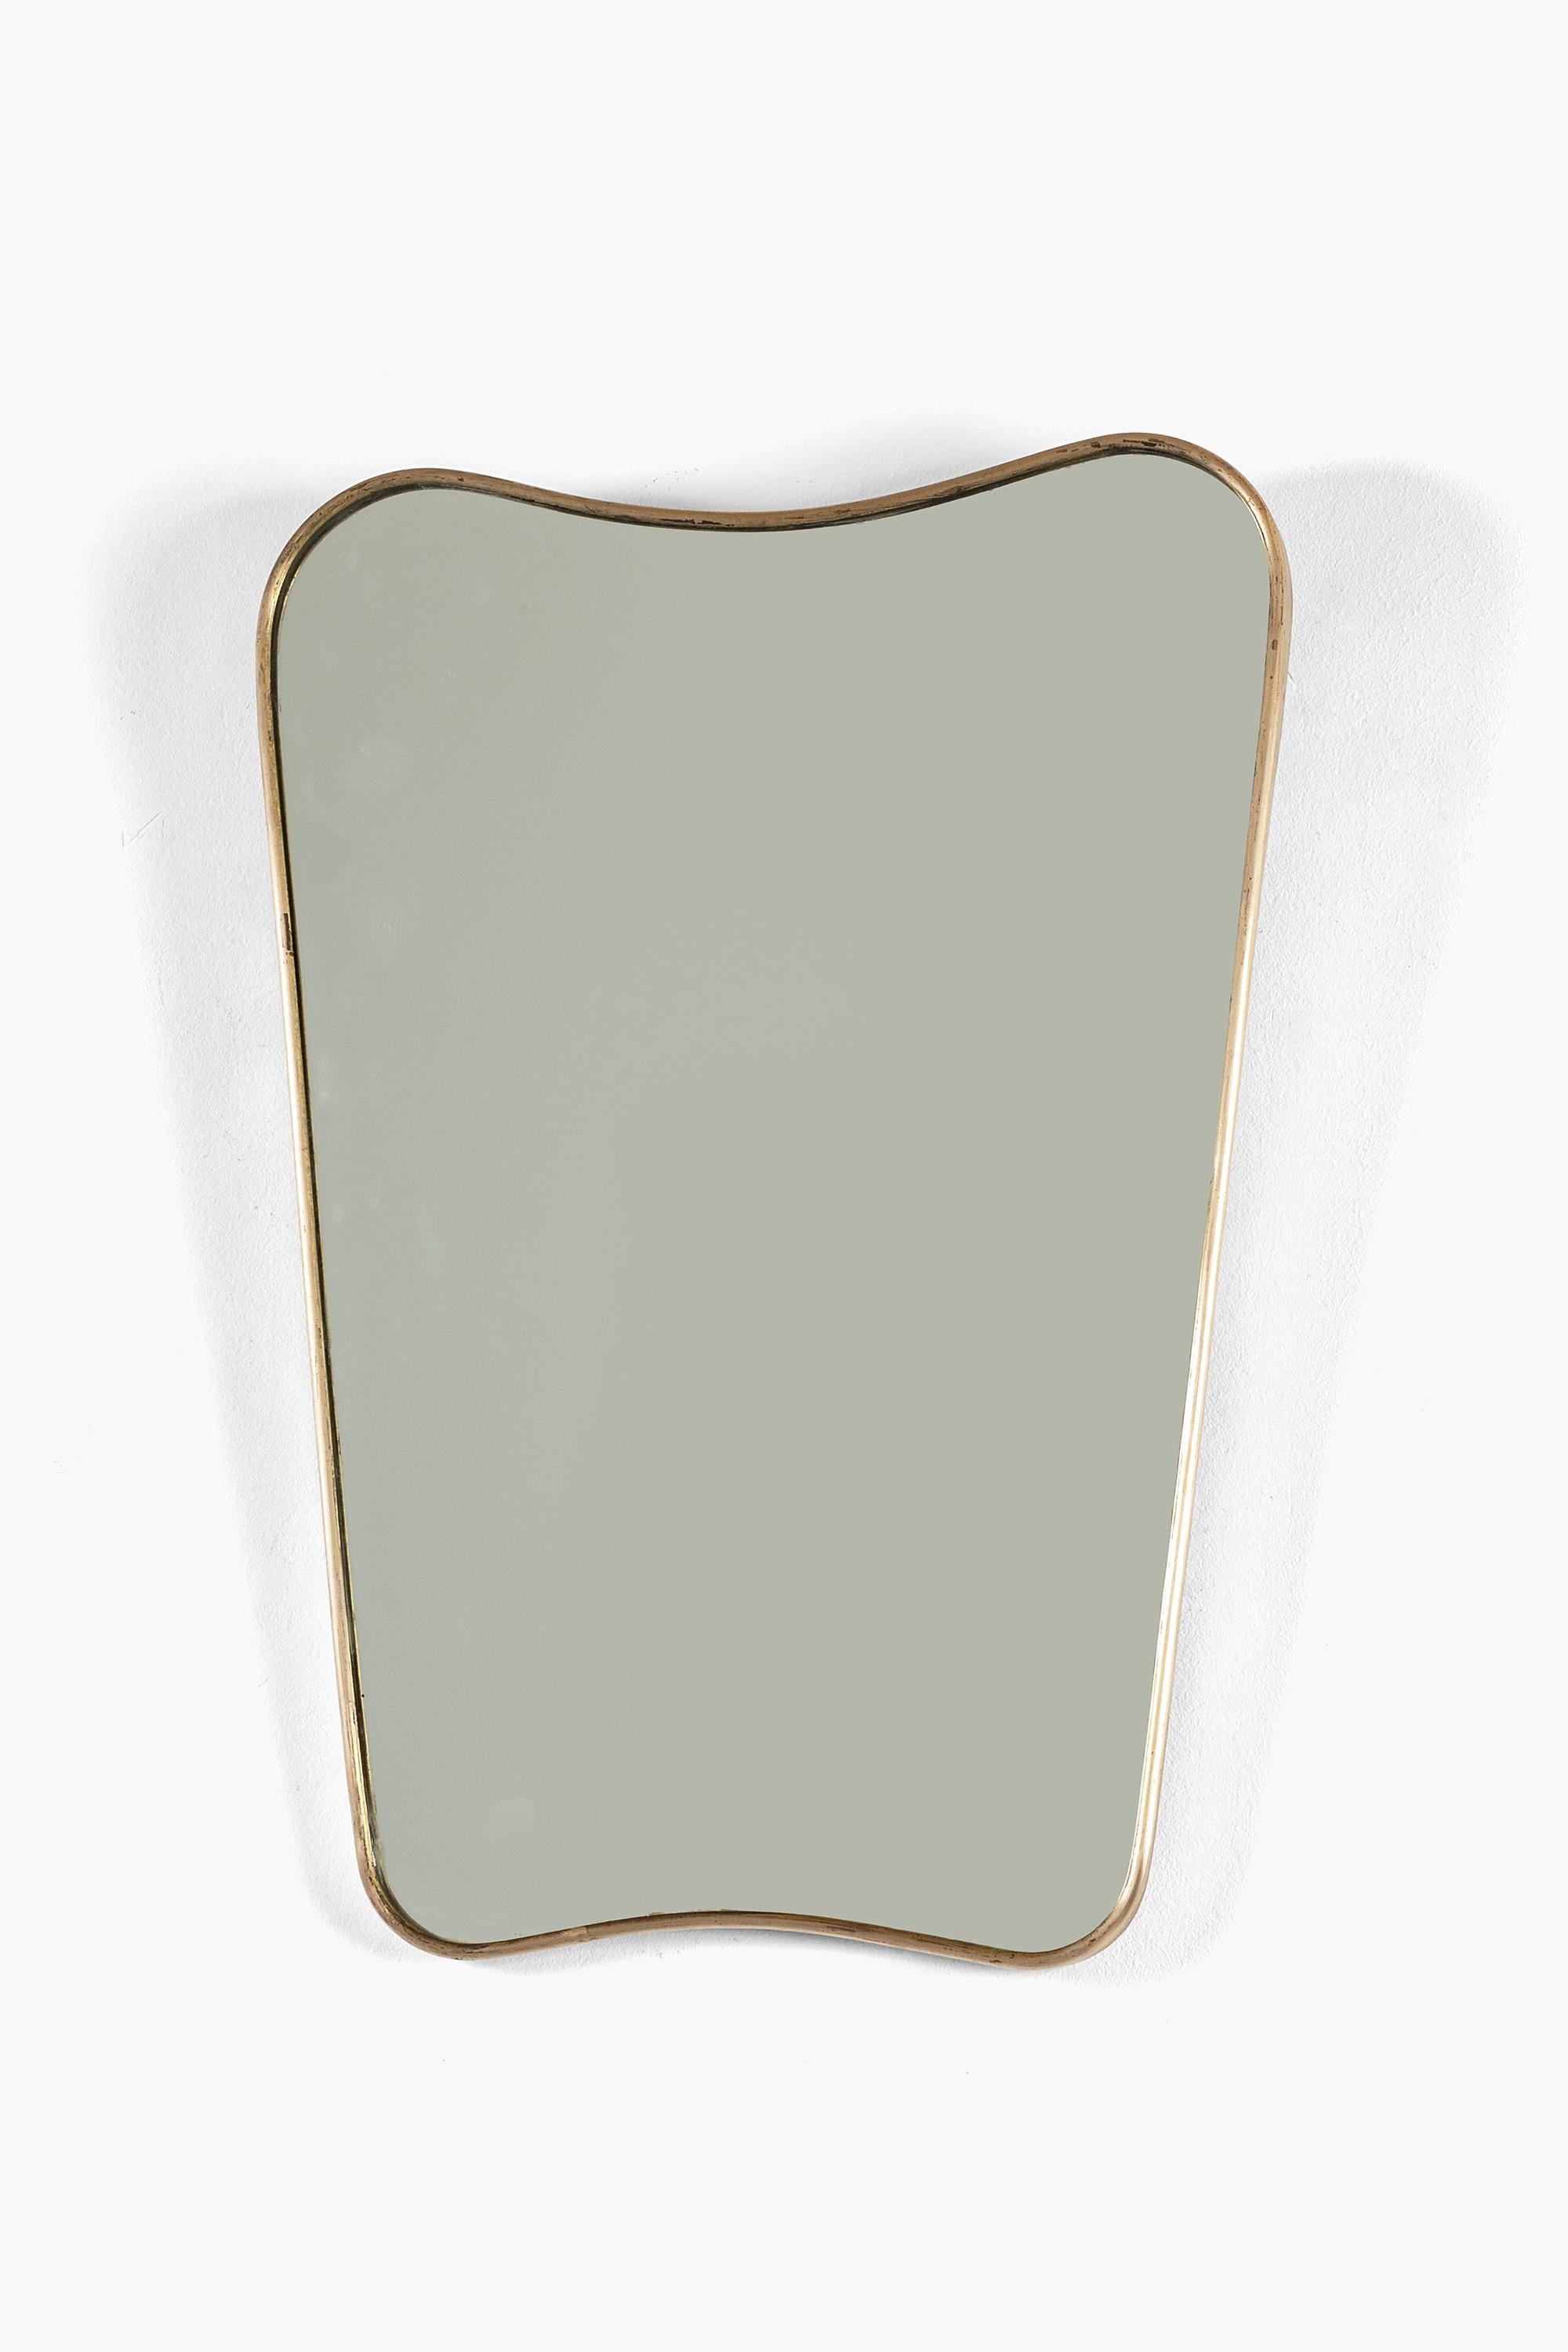 Gilt 1950s Italian Gio Ponti Brass Framed Mirror  For Sale